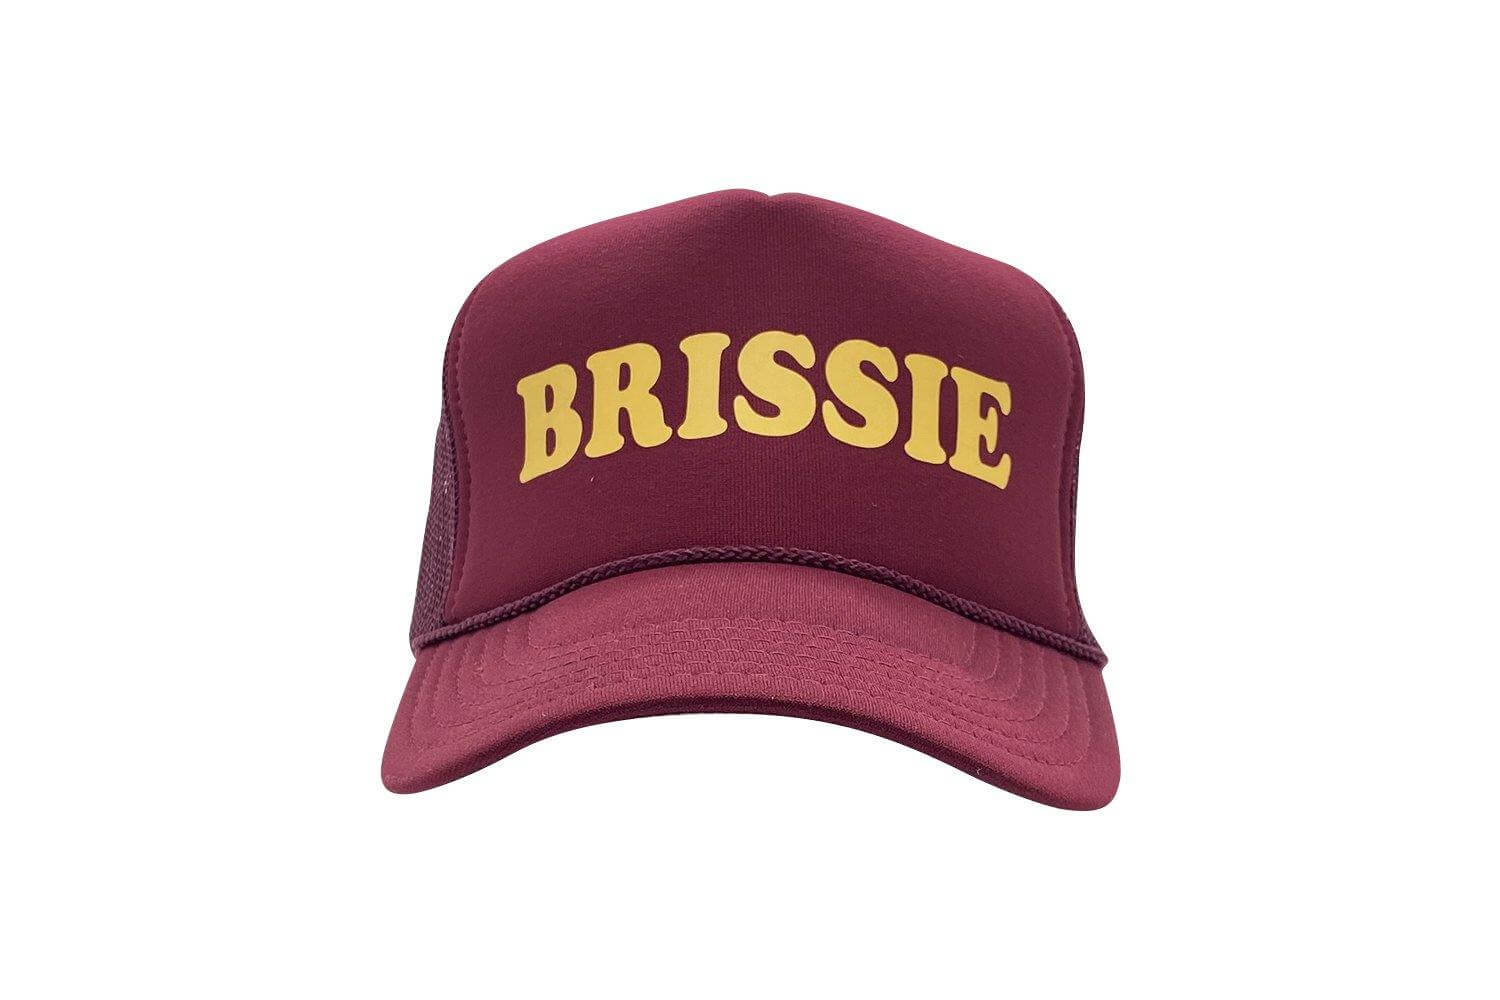 Brisbane high crown trucker cap with mesh back and snapback  - Tropic Trucker Australia®